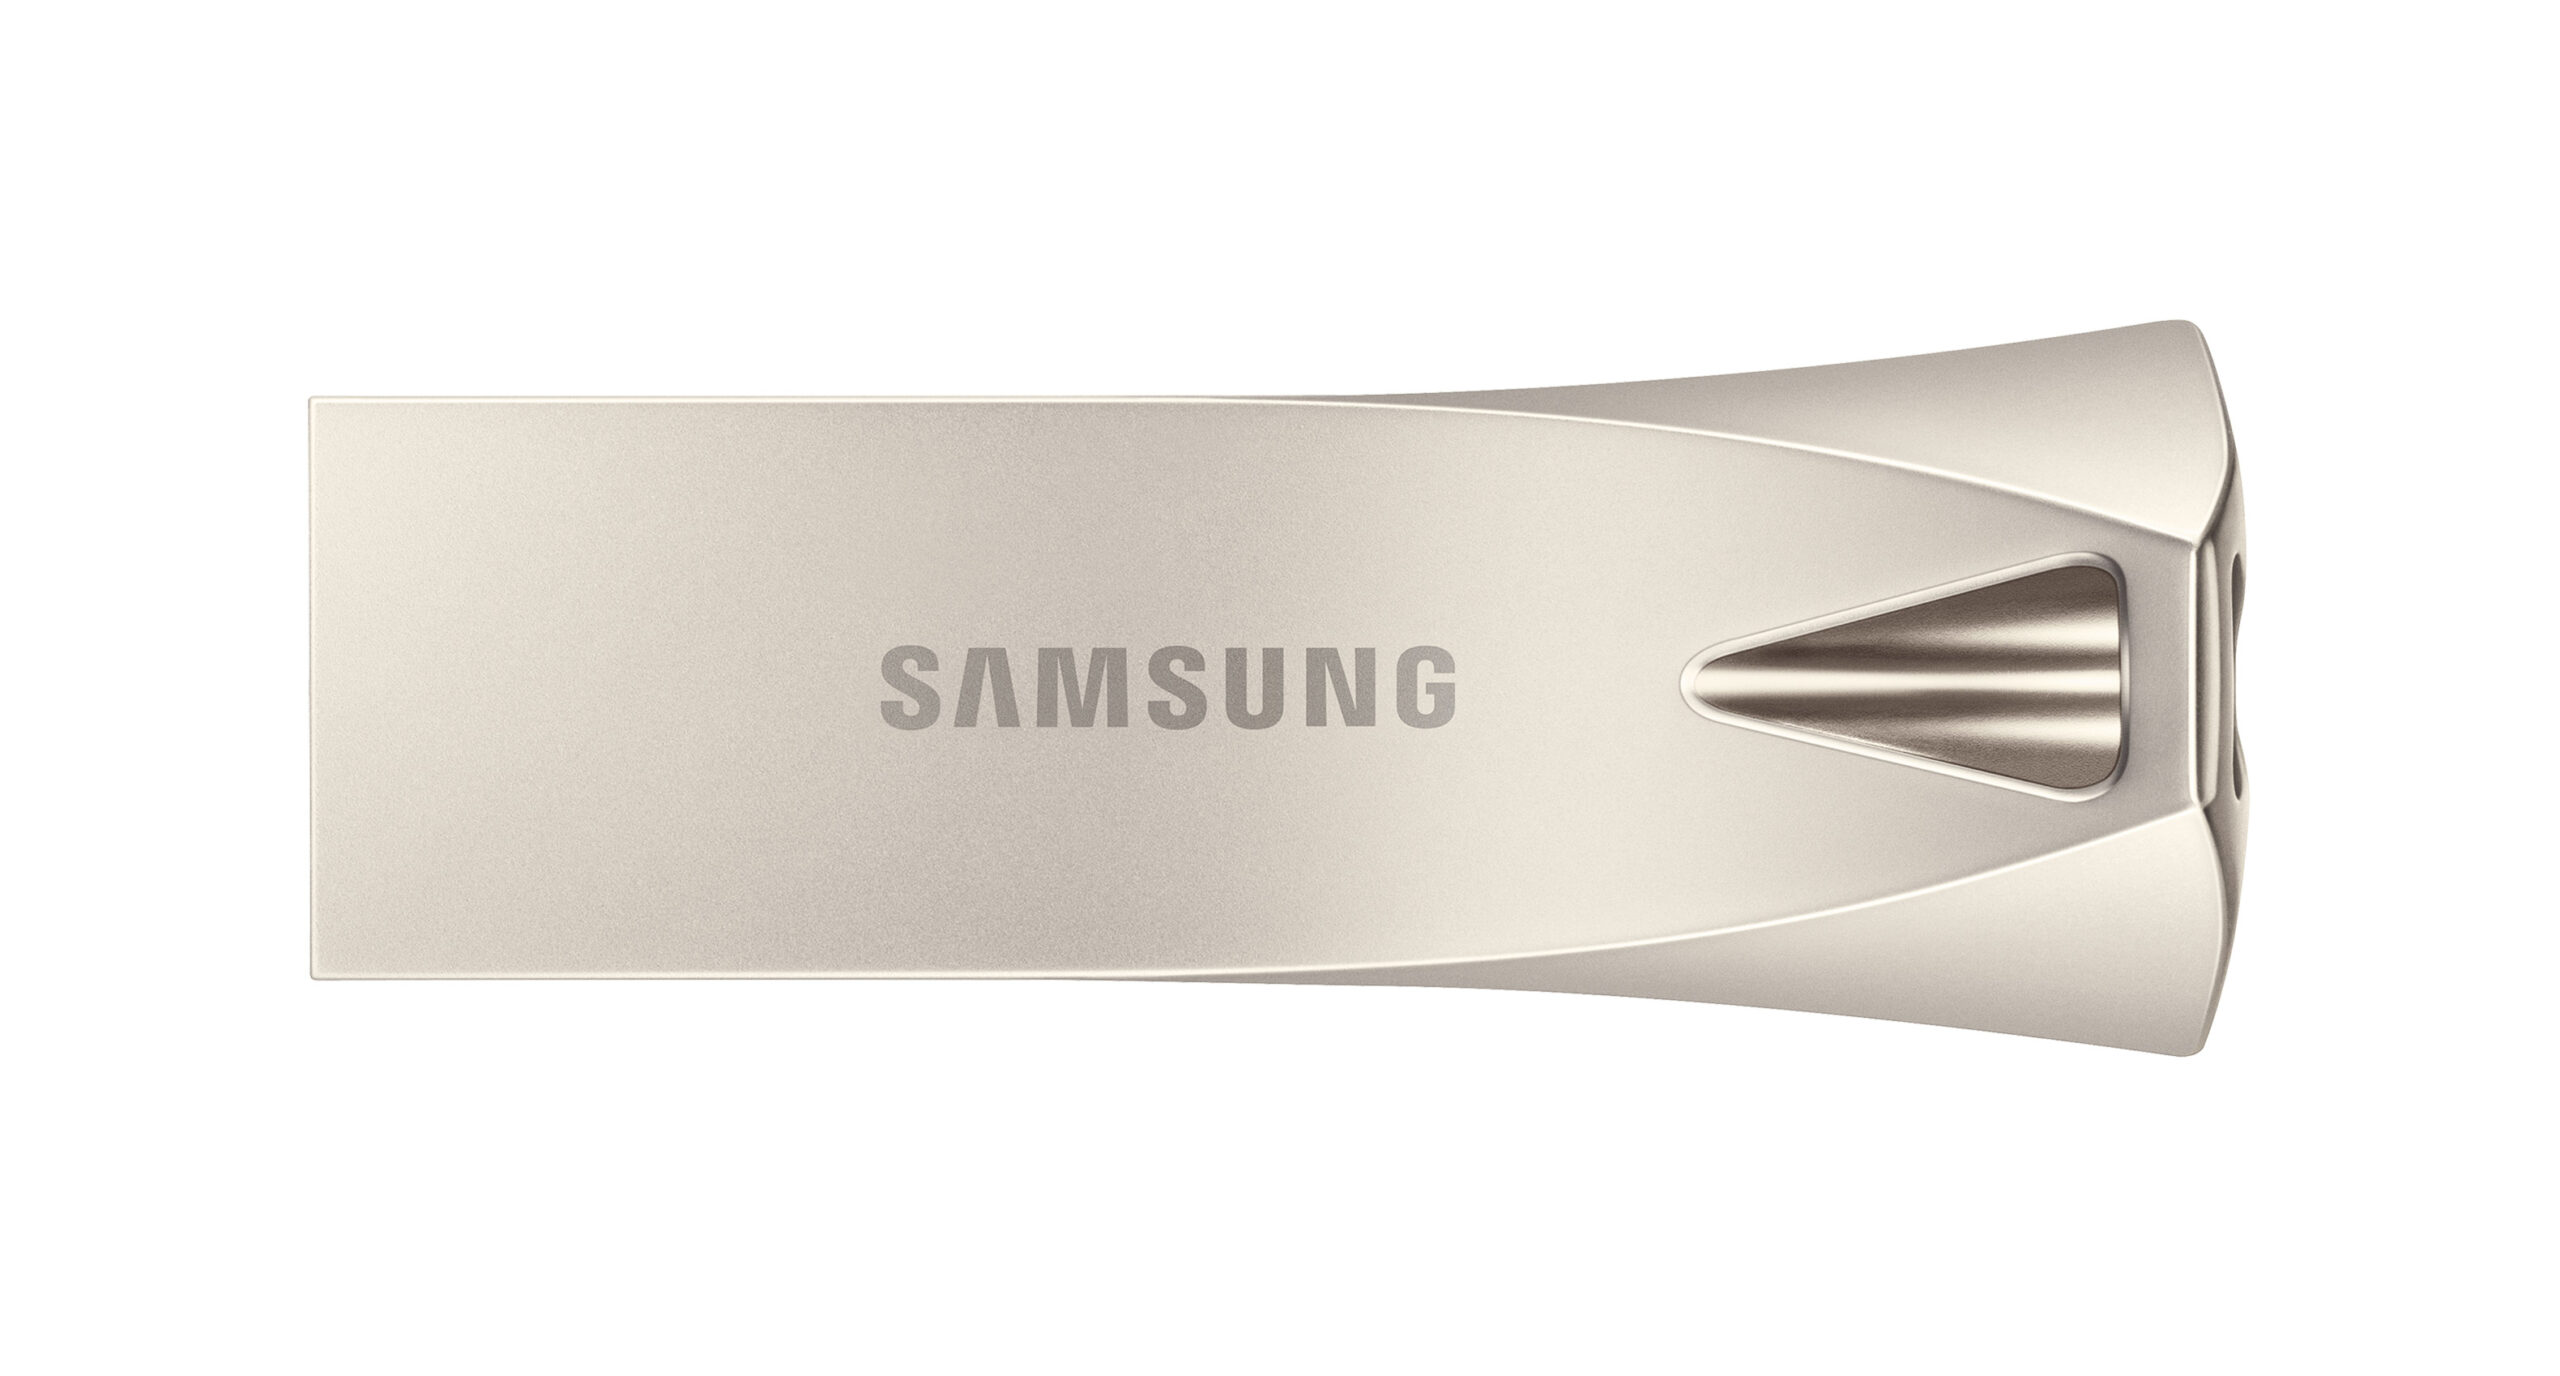 Samsung Metal USB 3.1